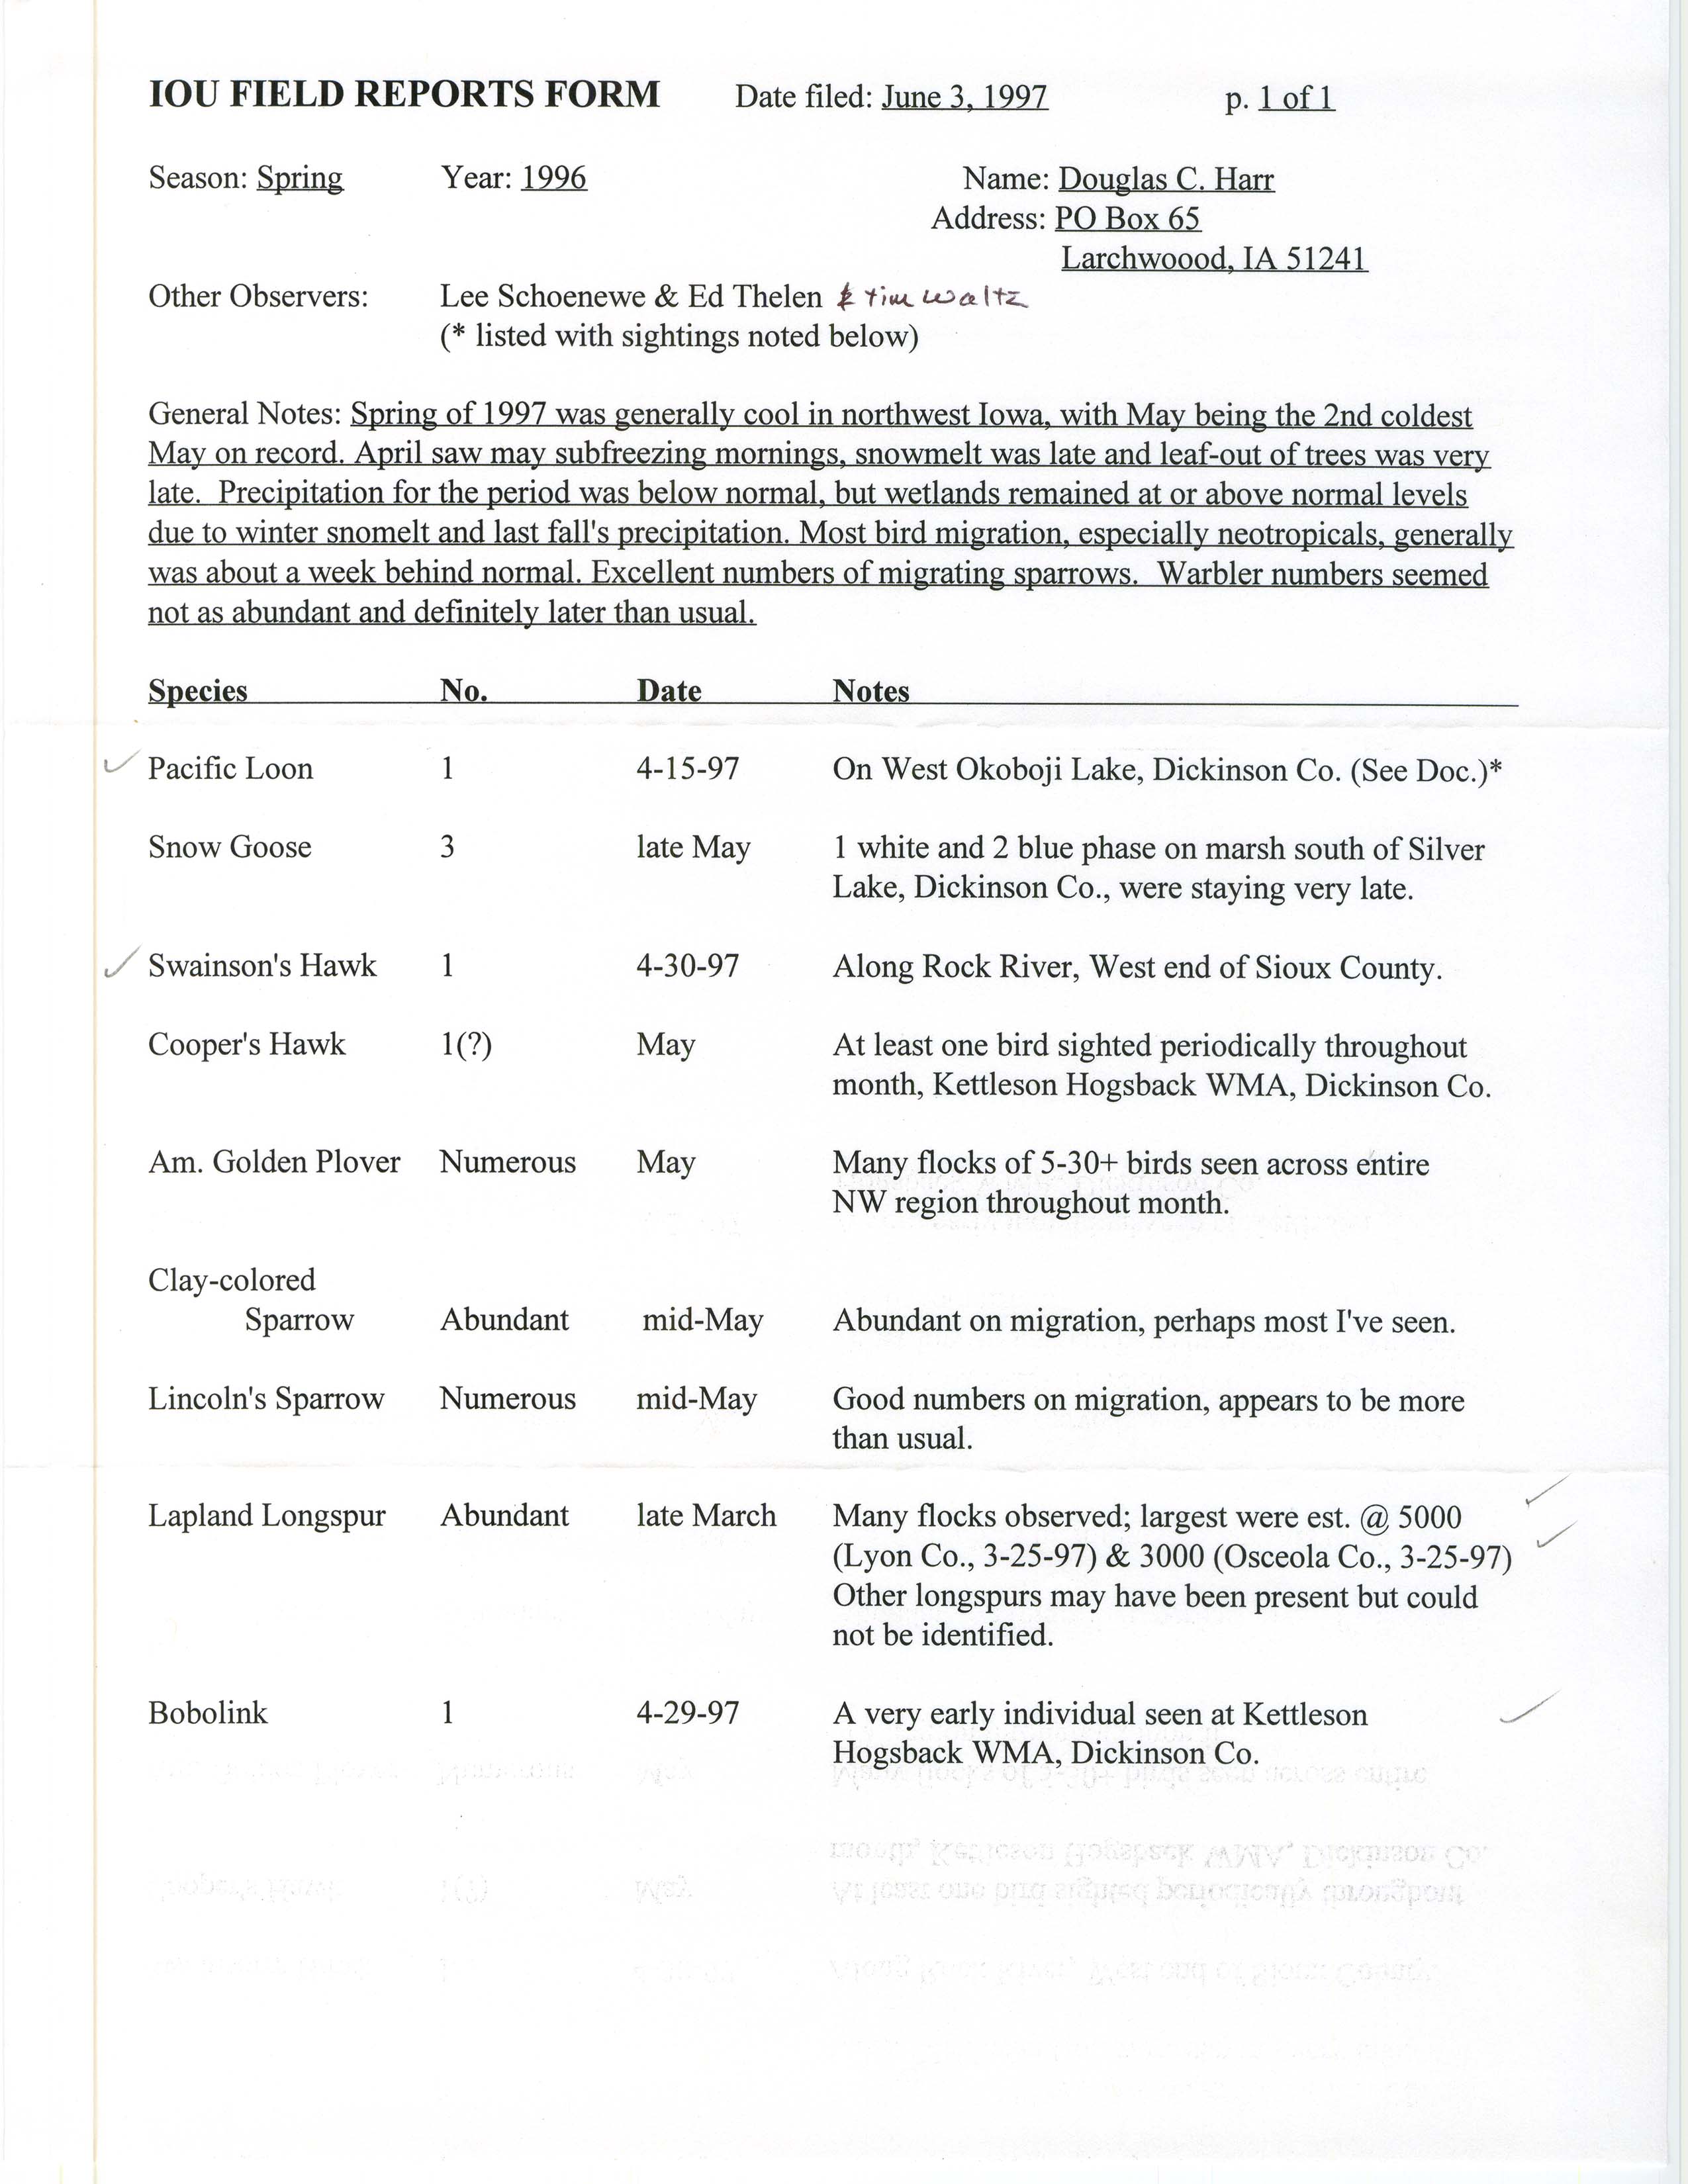 IOU field reports form, Douglas C. Harr, June 3, 1997